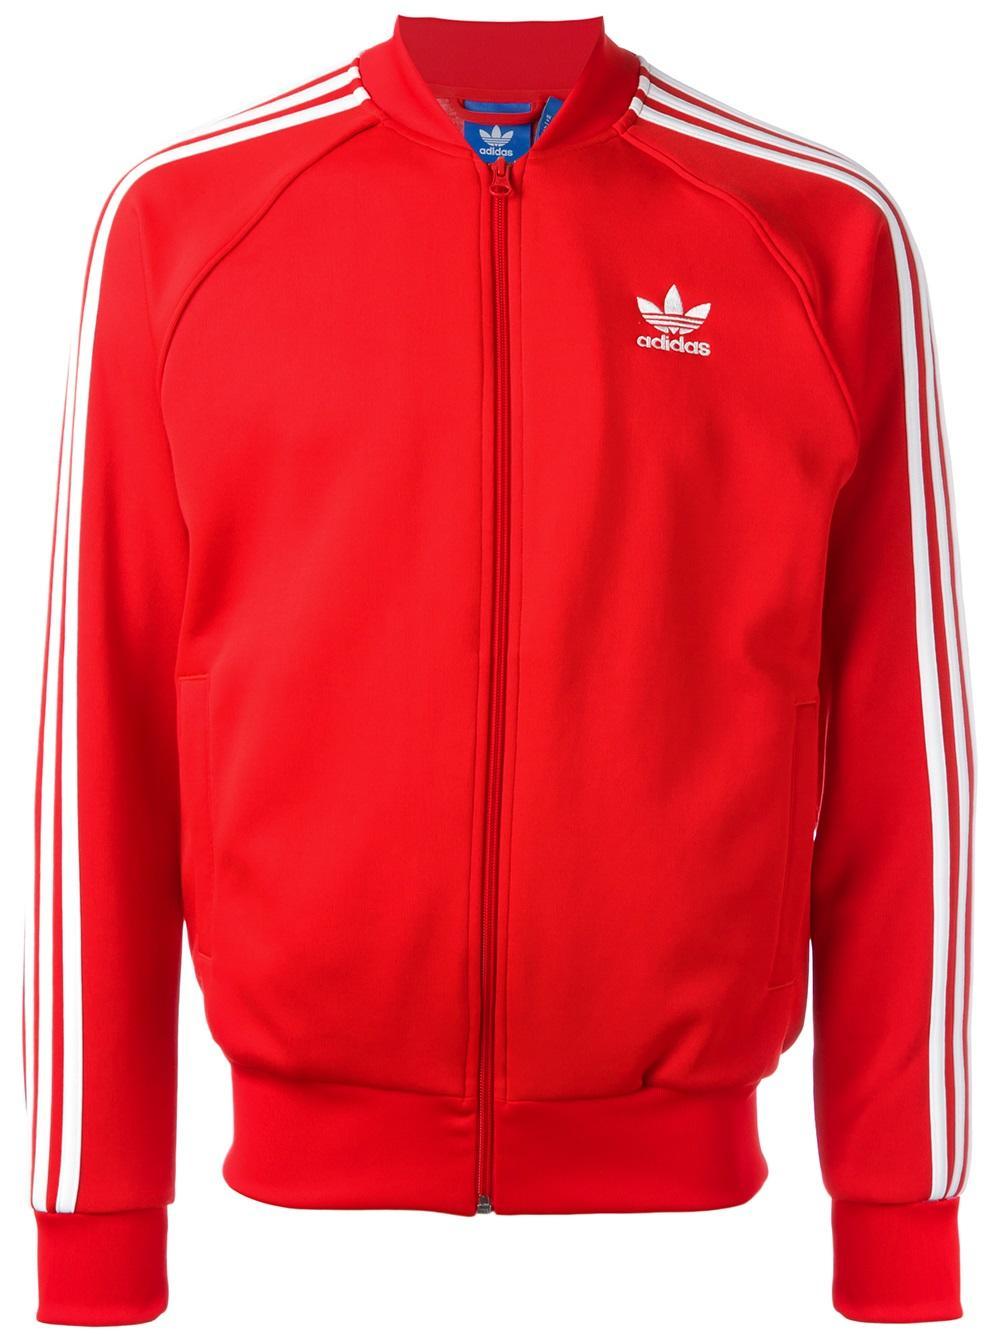 adidas Originals Firebird Tricot Track Jacket in Scarlet (Red) for Men -  Lyst